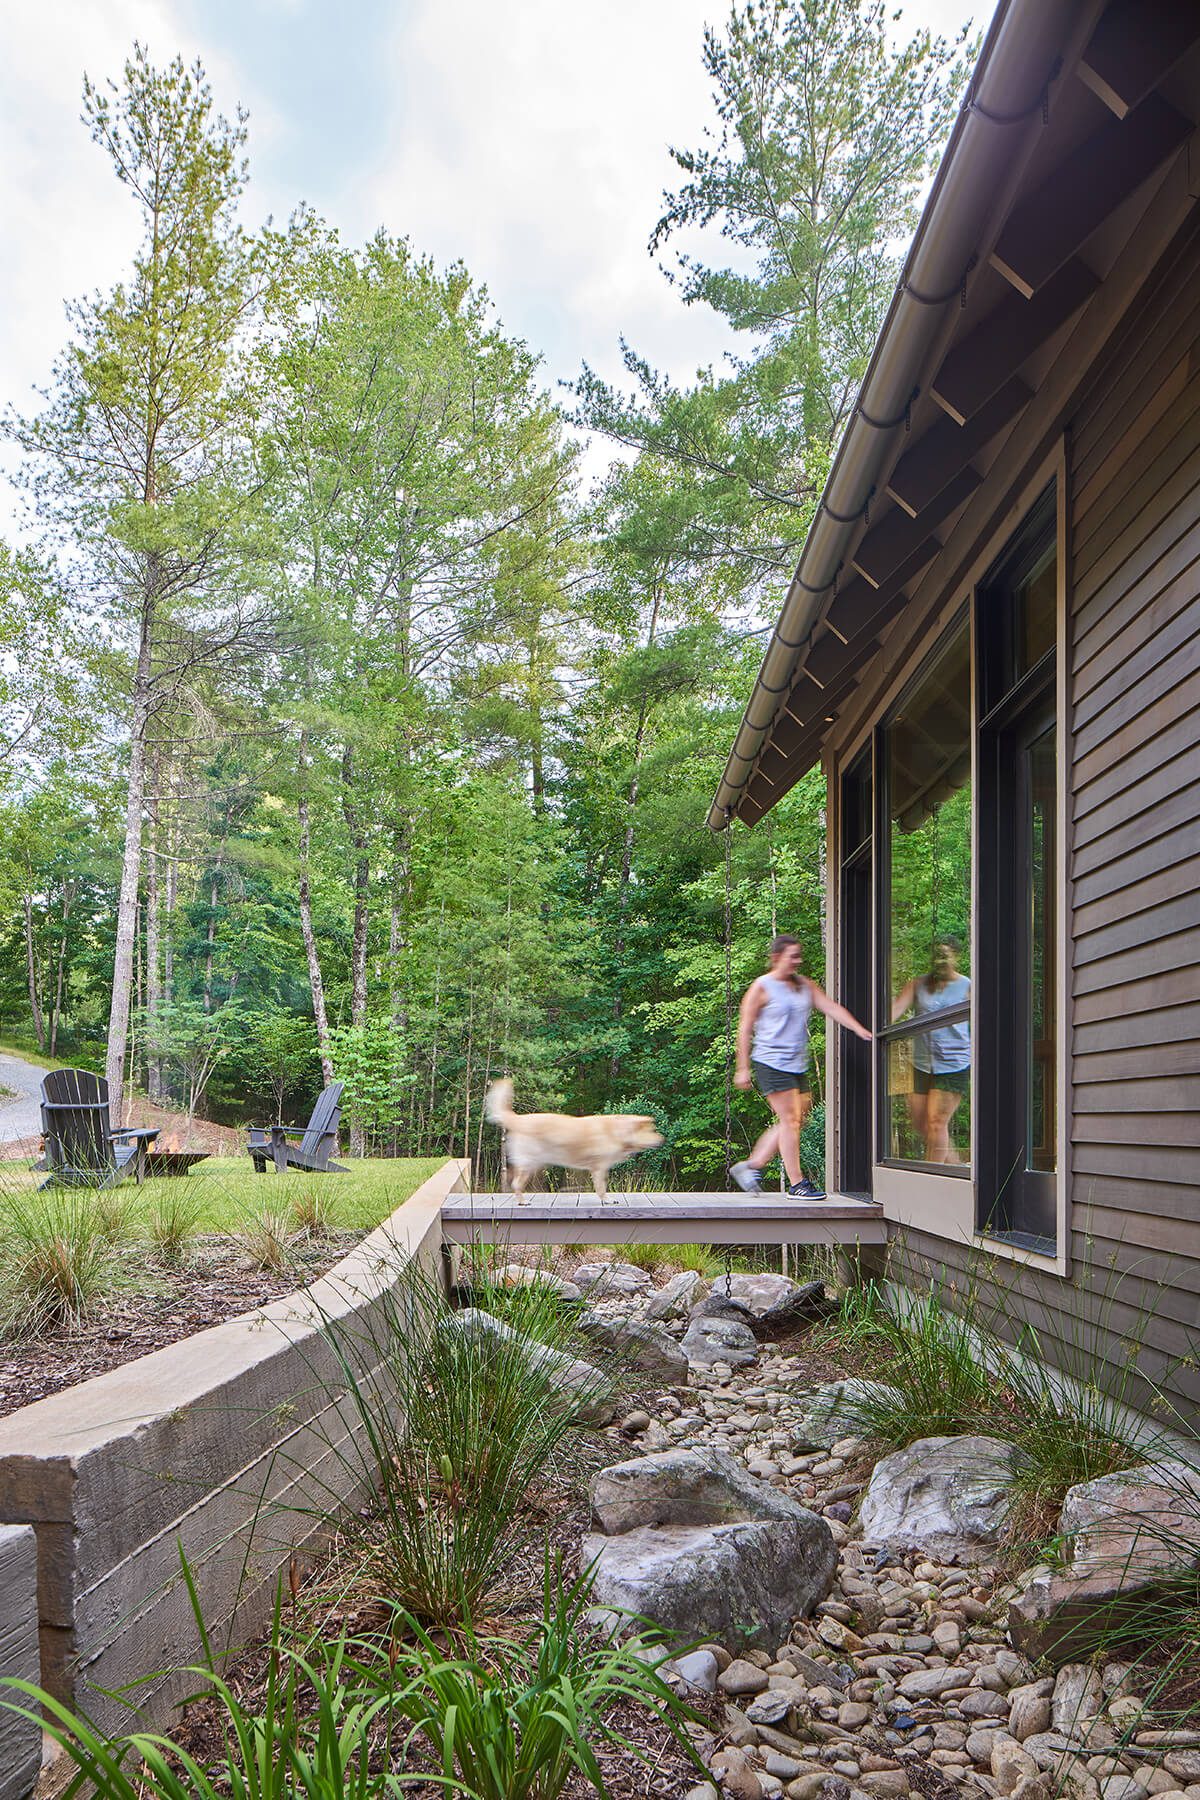 The Camp Campos lawn and bridge architectural home design in Western North Carolina